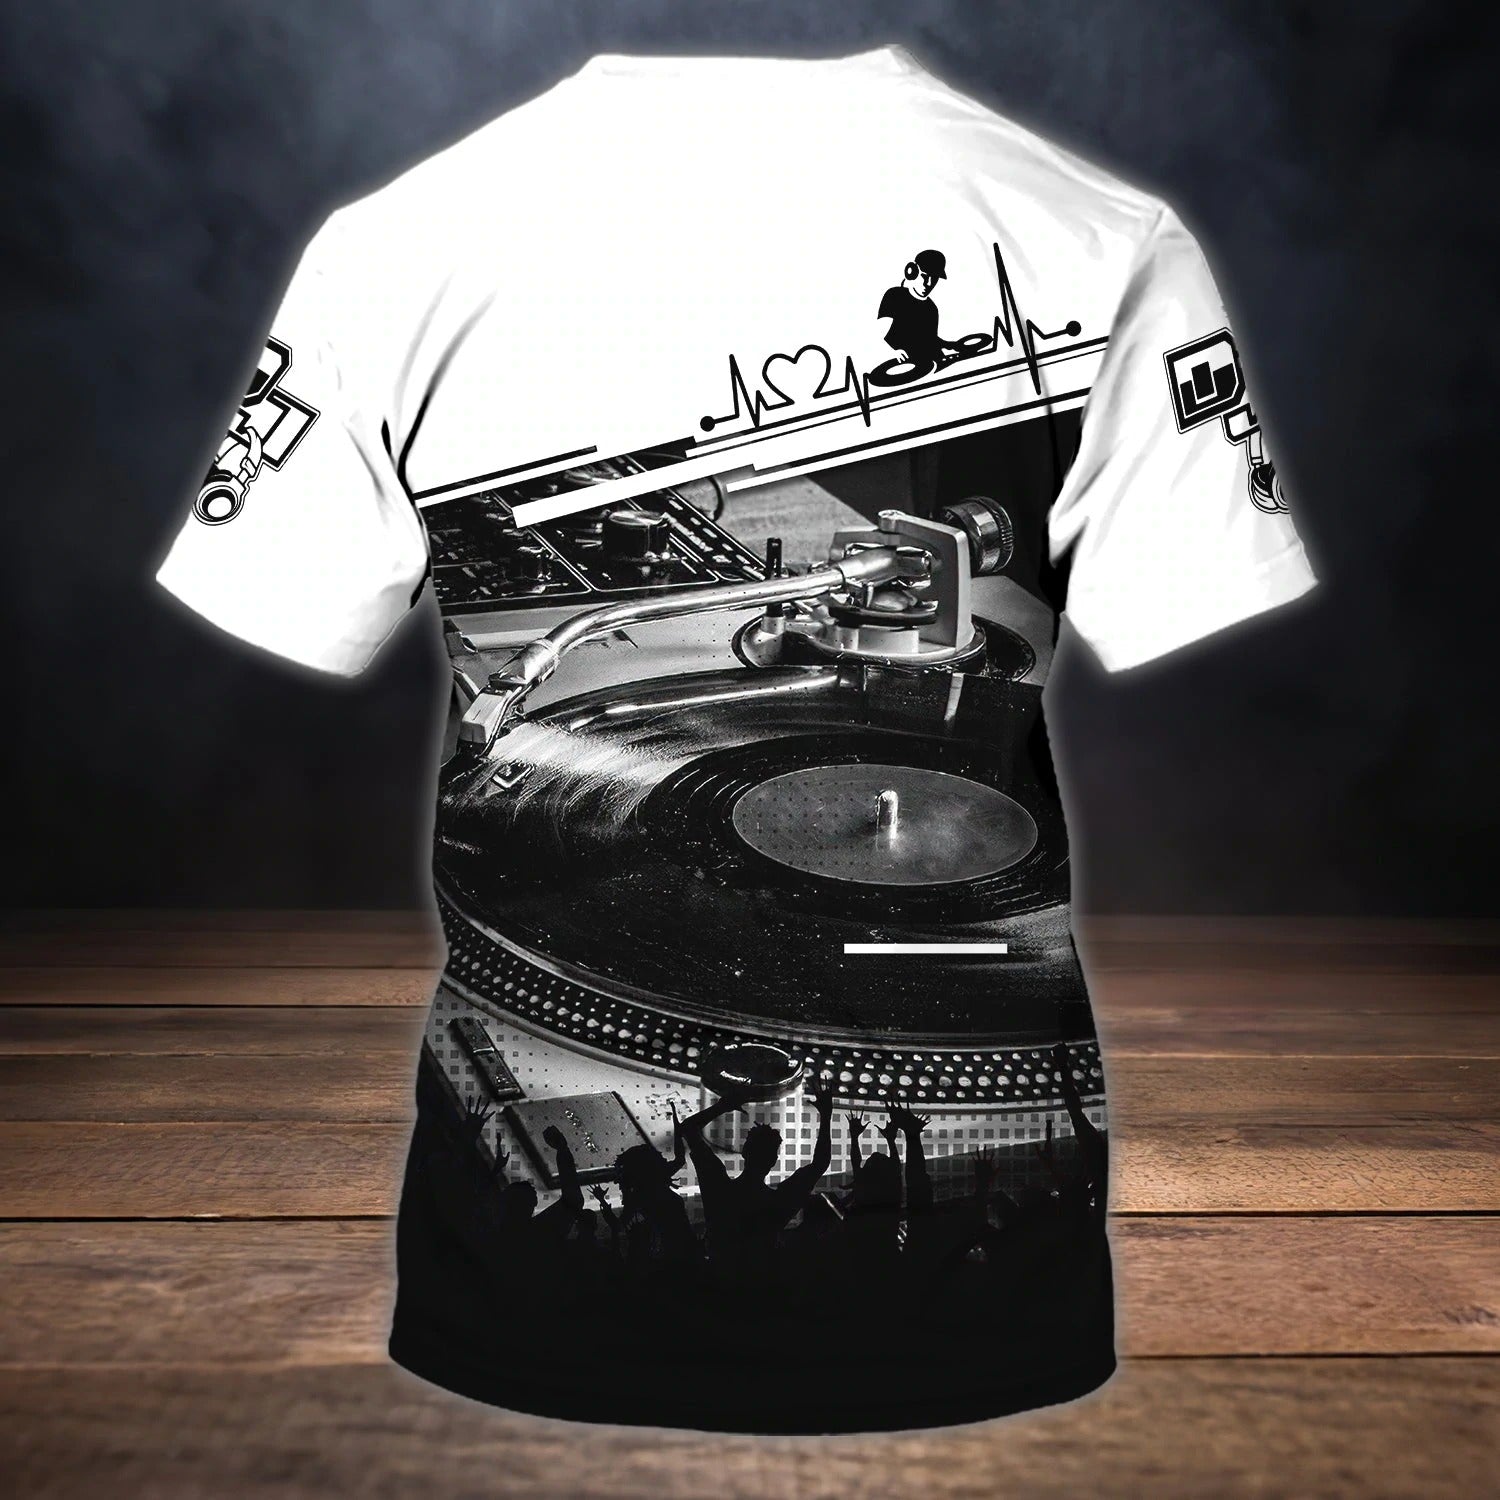 Personalized Deejay 3D T Shirt/ Colorful Premium Dj Shirts Full Print/ Cool Best Present To Disc Jockey